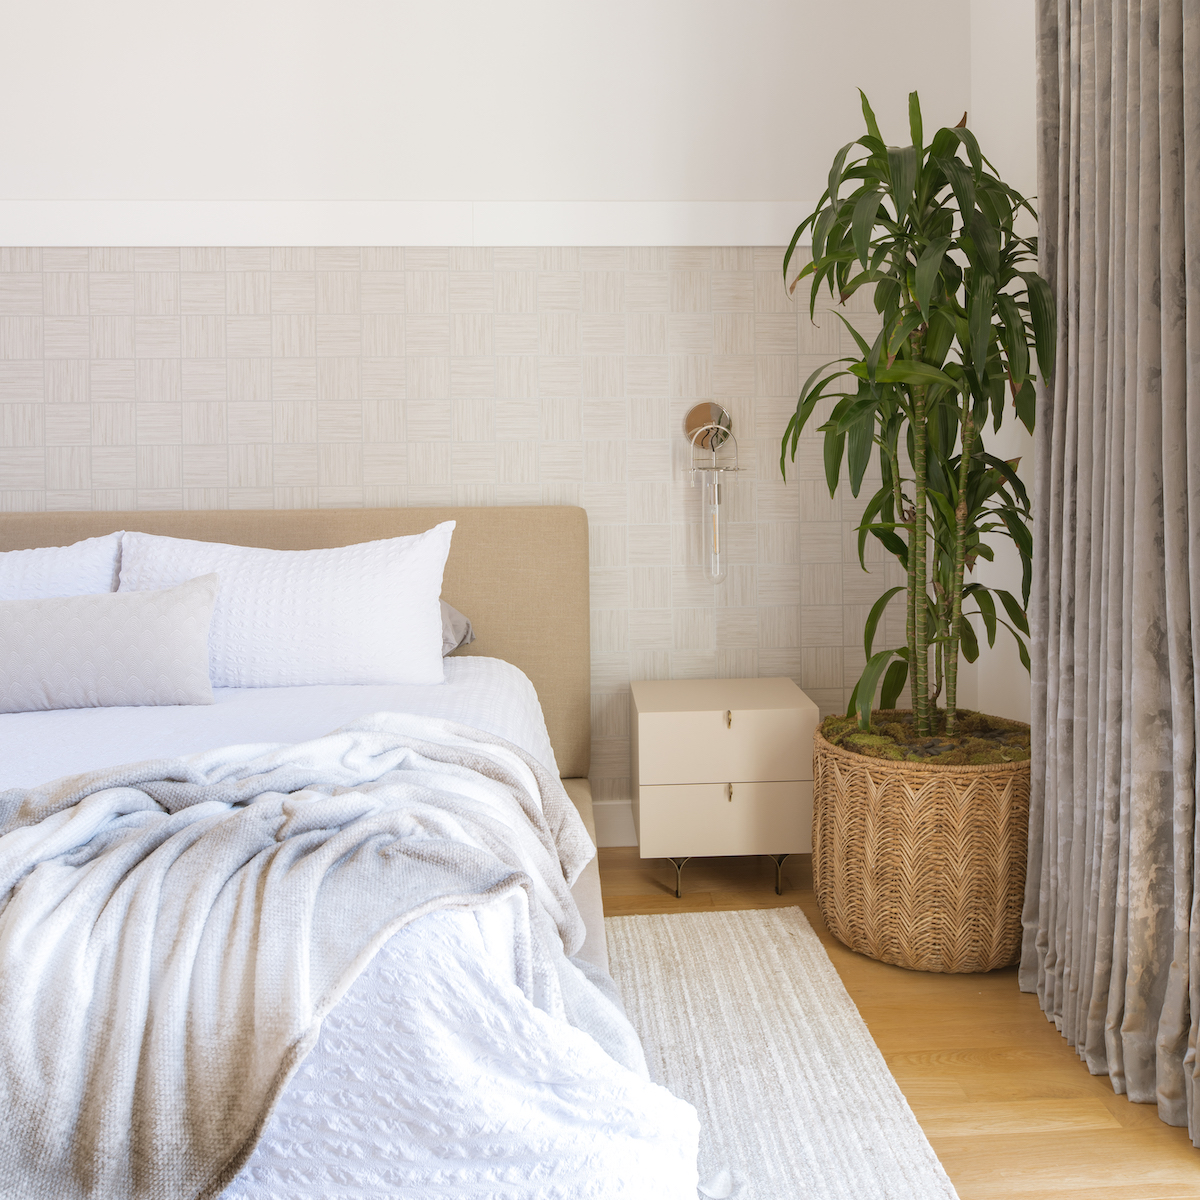 beyond-interior-design-bedroom-design-wall-sconce-nighstand